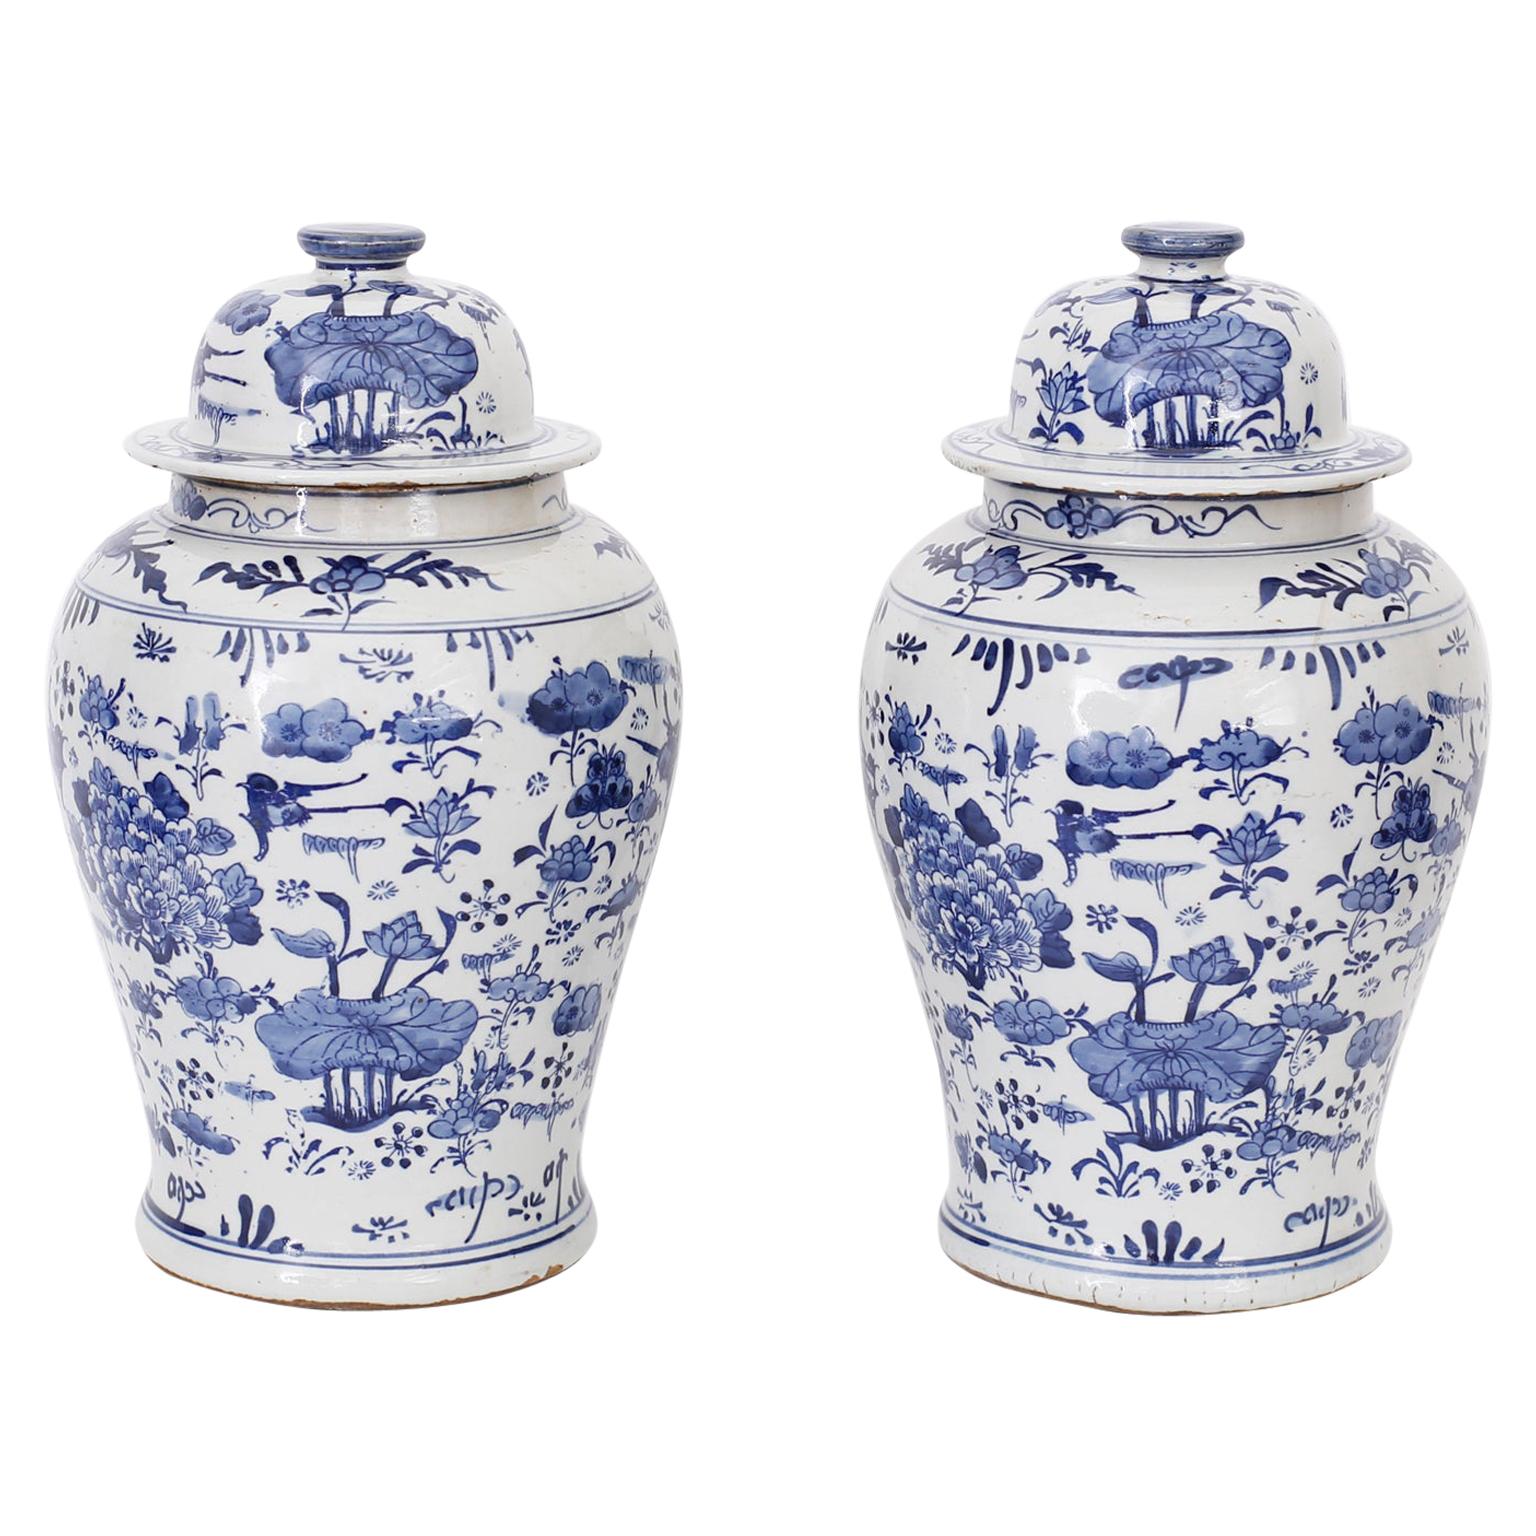 Pair of Blue and White Porcelain Ginger Jars